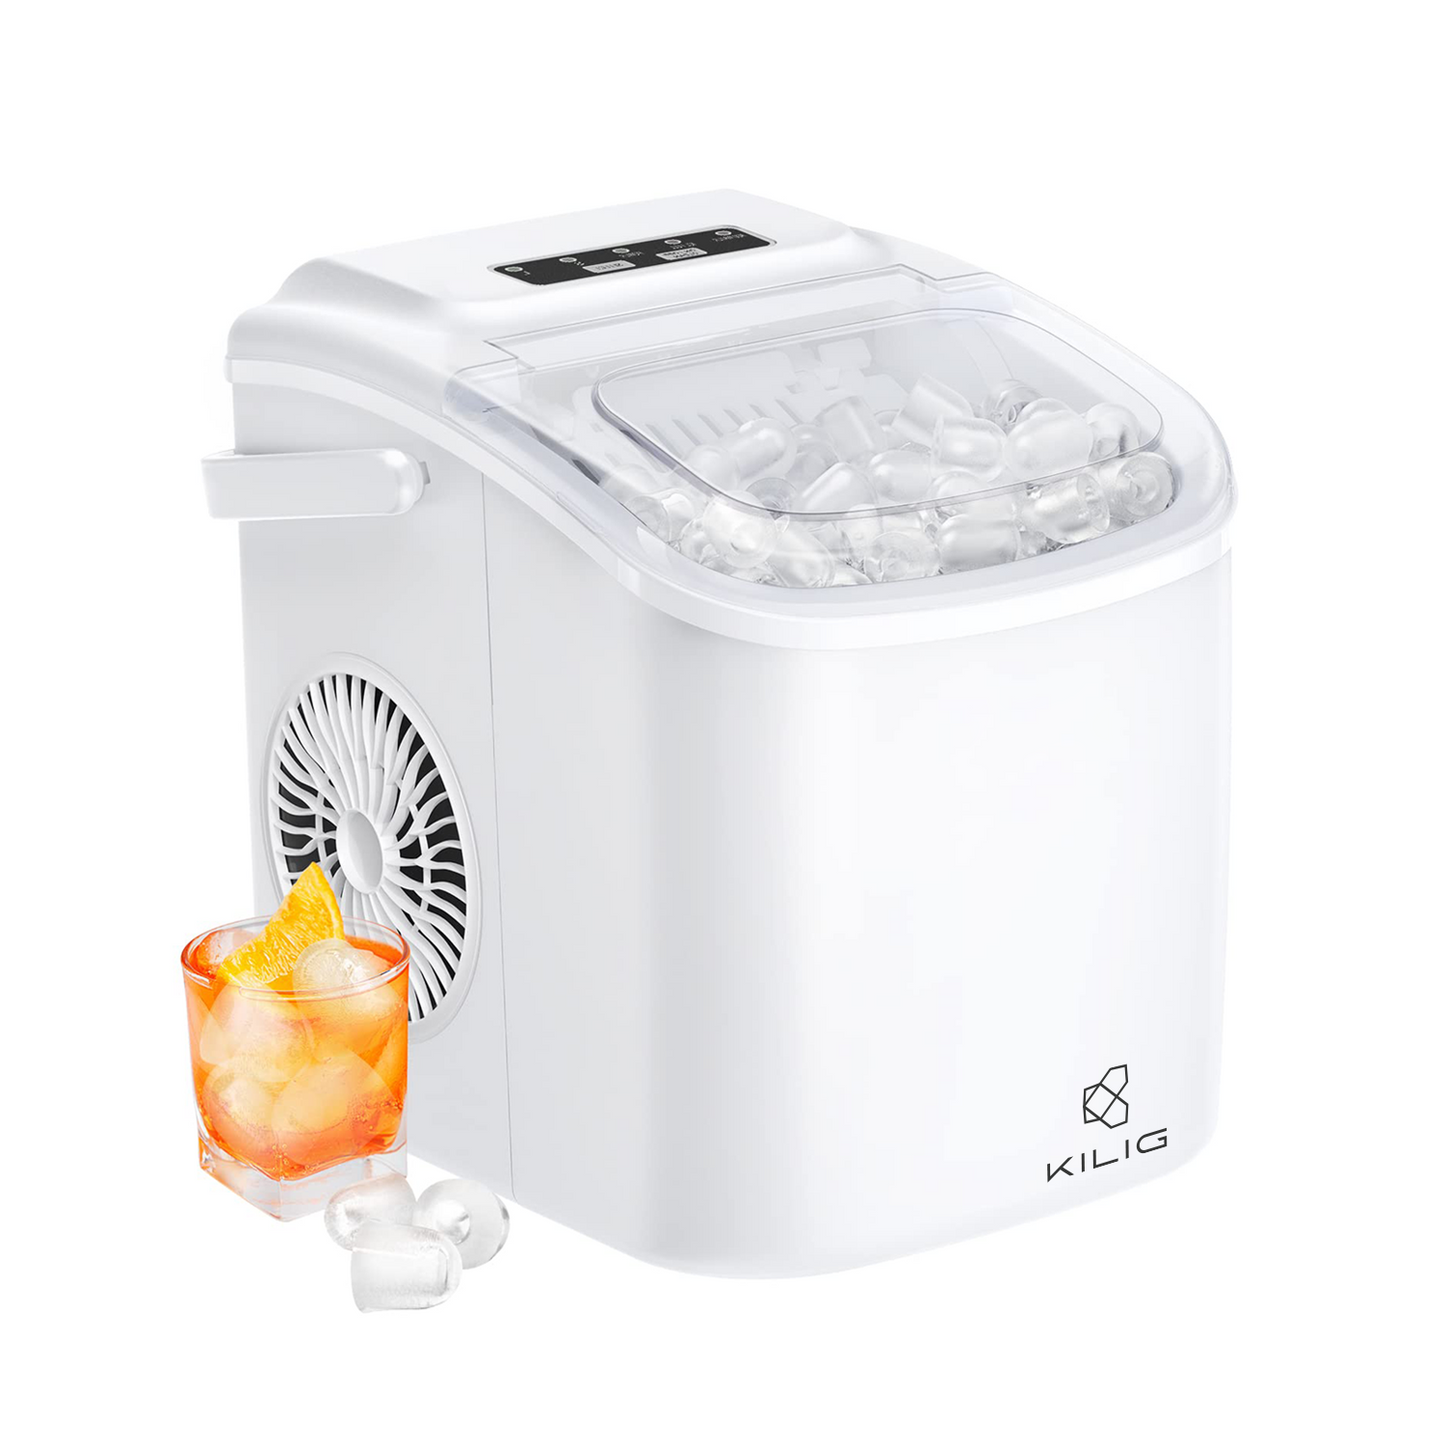 H01W Countertop Ice maker machine